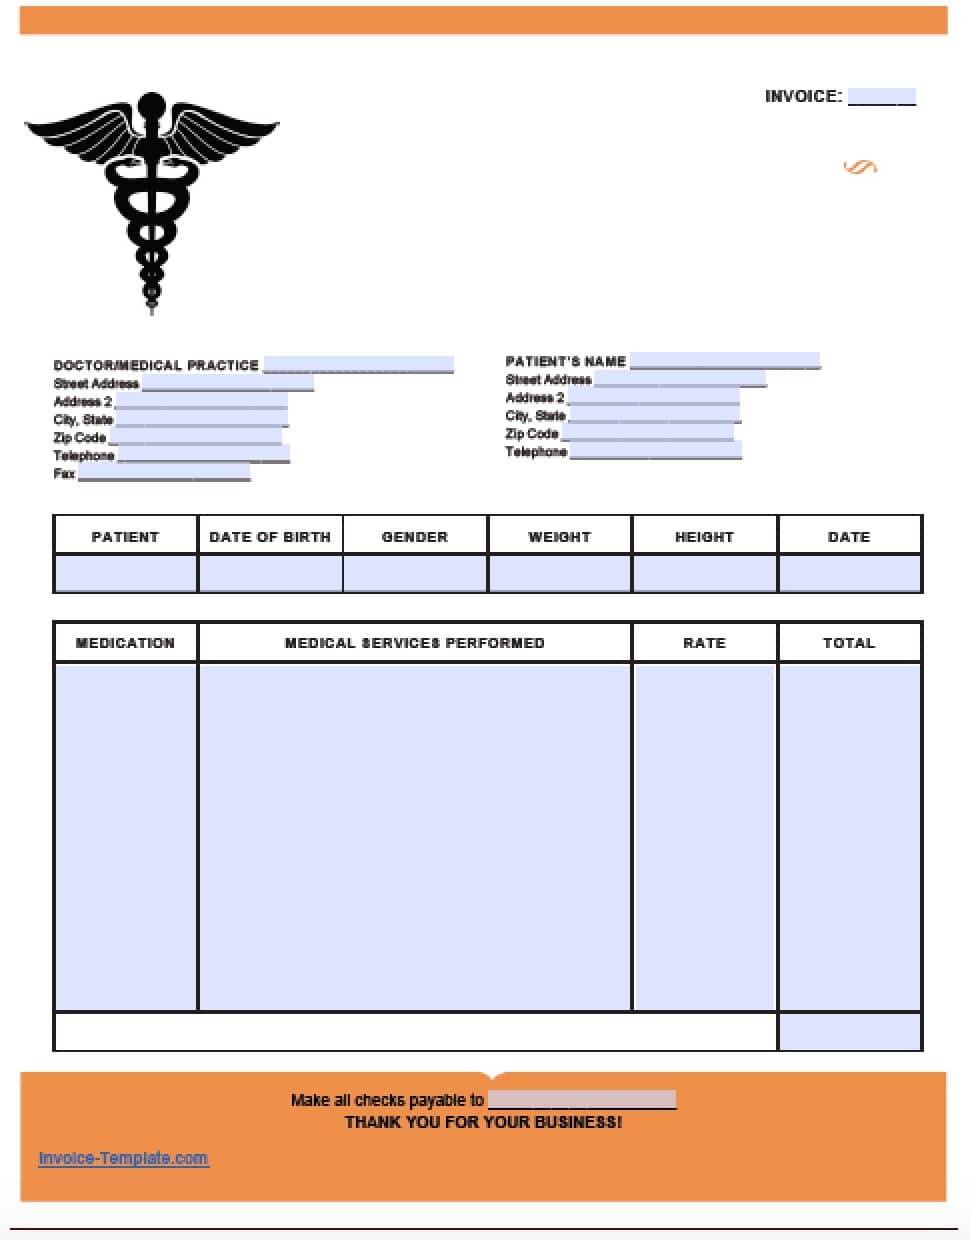 medical-bill-invoice-template-adobe-pdf-microsoft-word.jpg